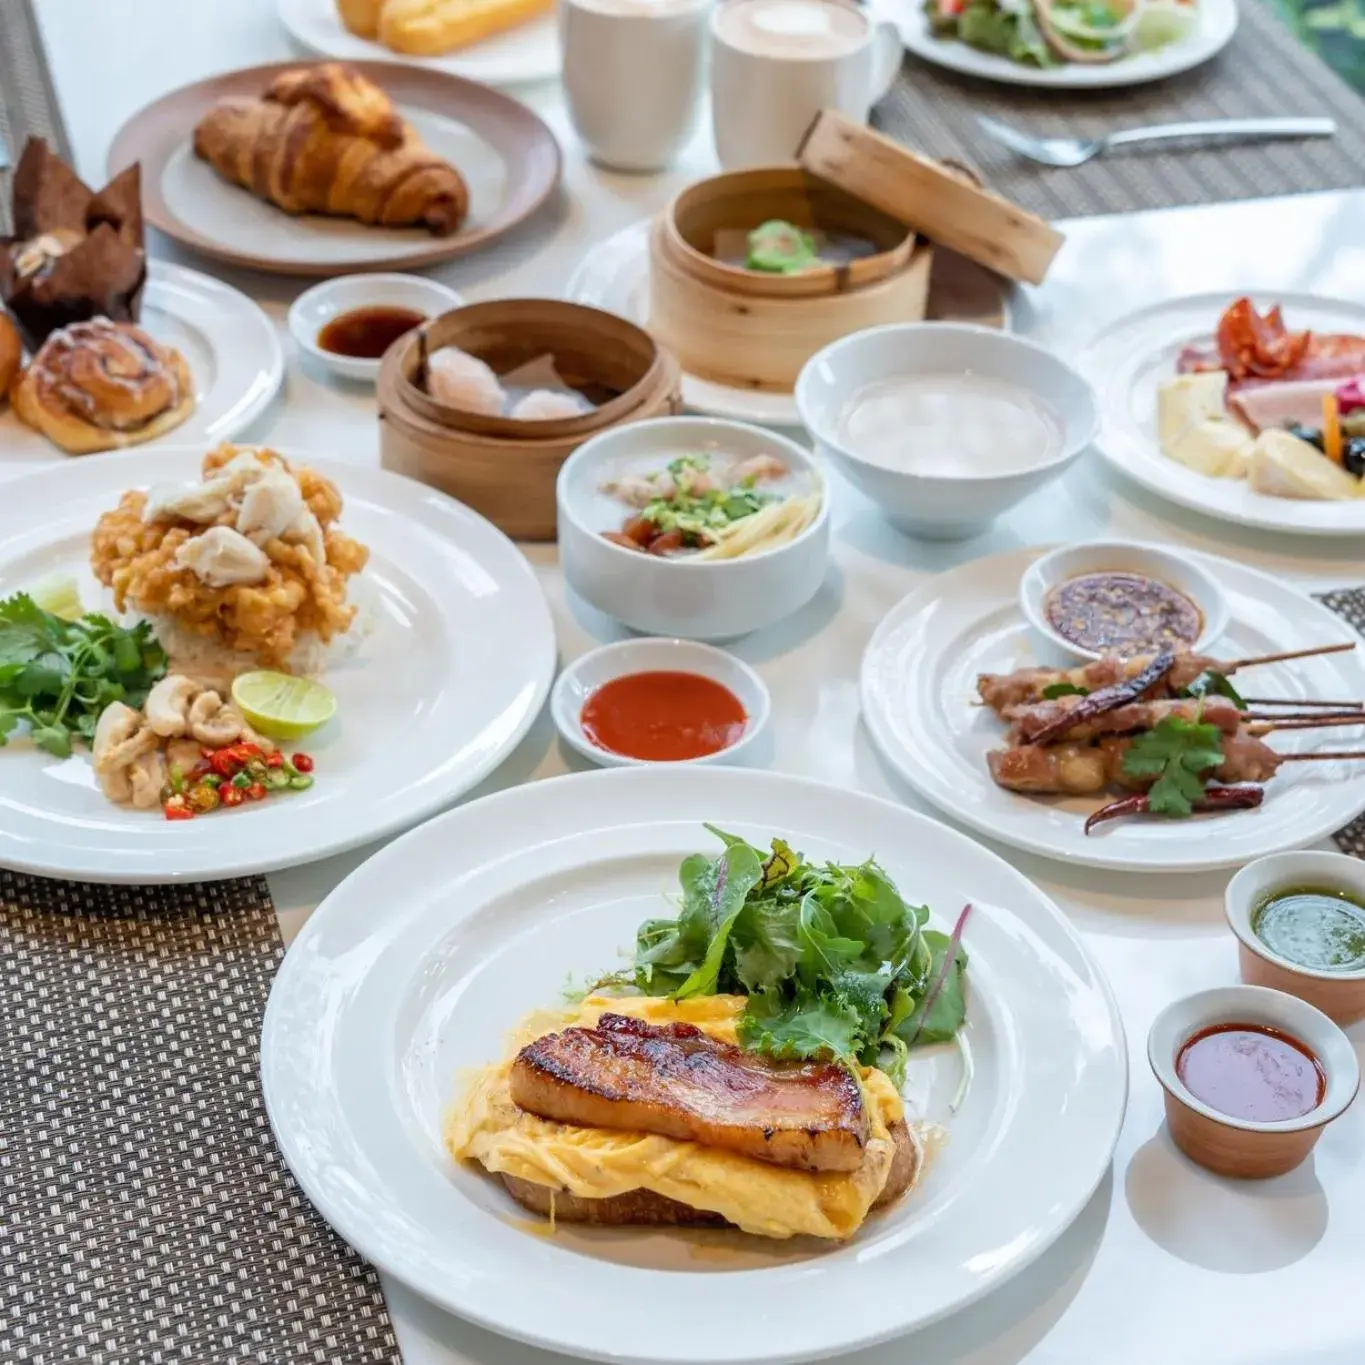 Food, Lunch and Dinner in Le Meridien Suvarnabhumi, Bangkok Golf Resort and Spa